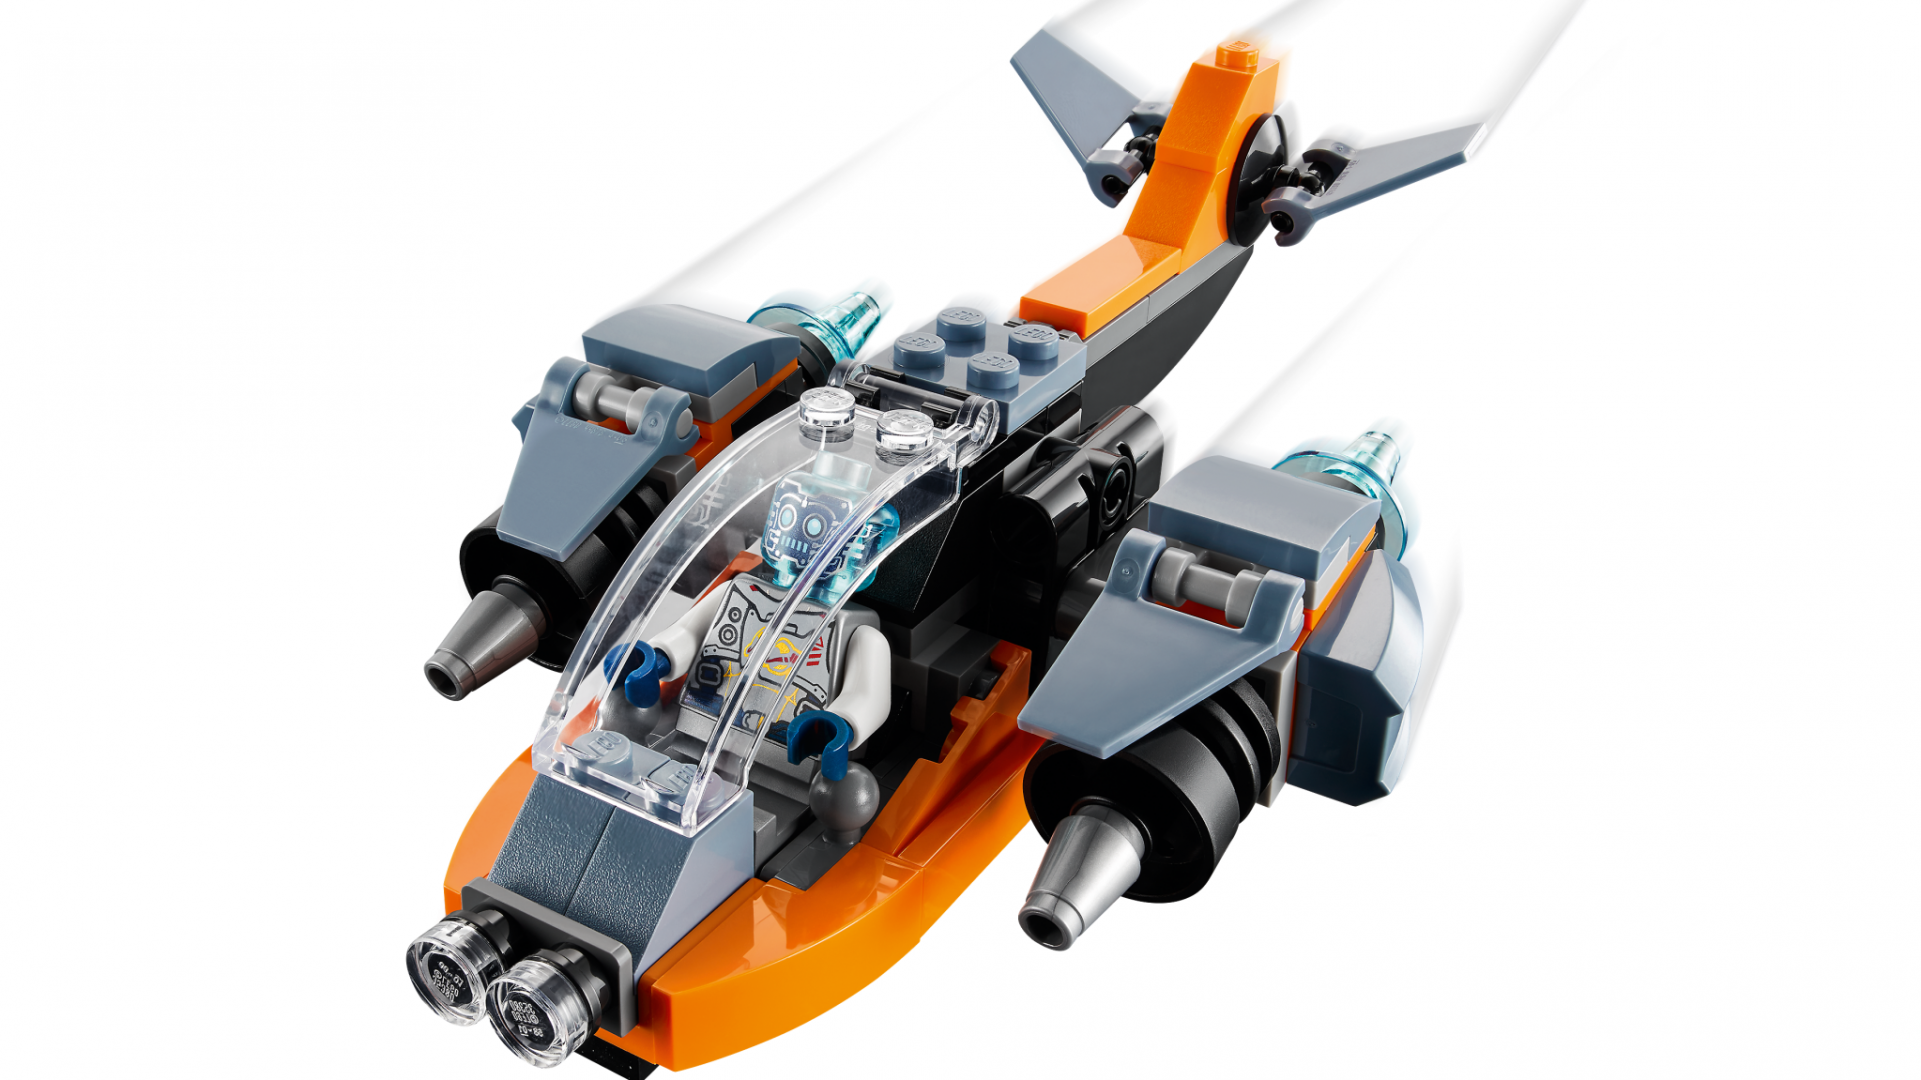 DRONA CIBERNETICA, LEGO 31111